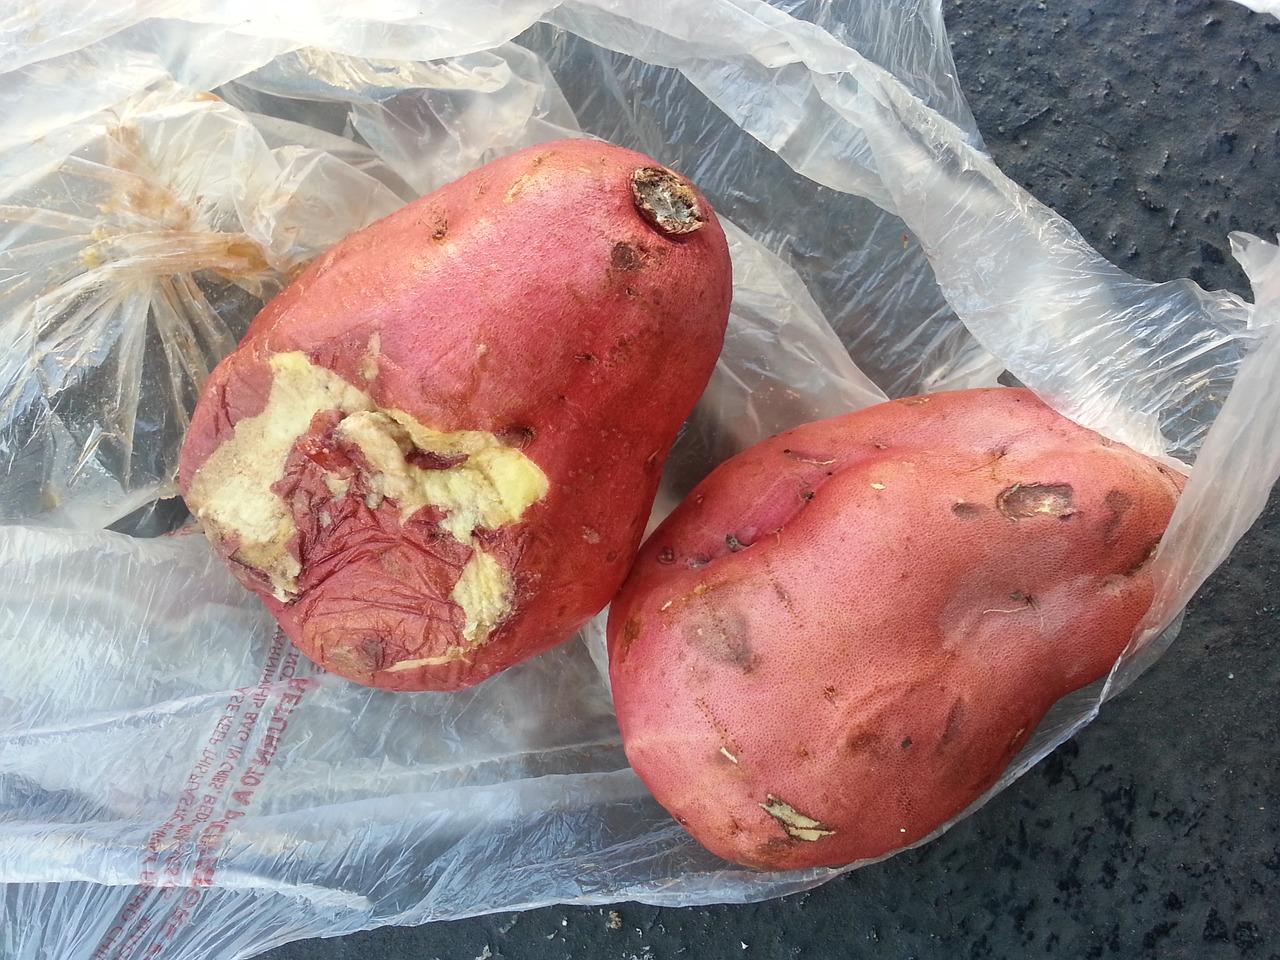 rotten sweet potatoes japan market exchange is not free photo